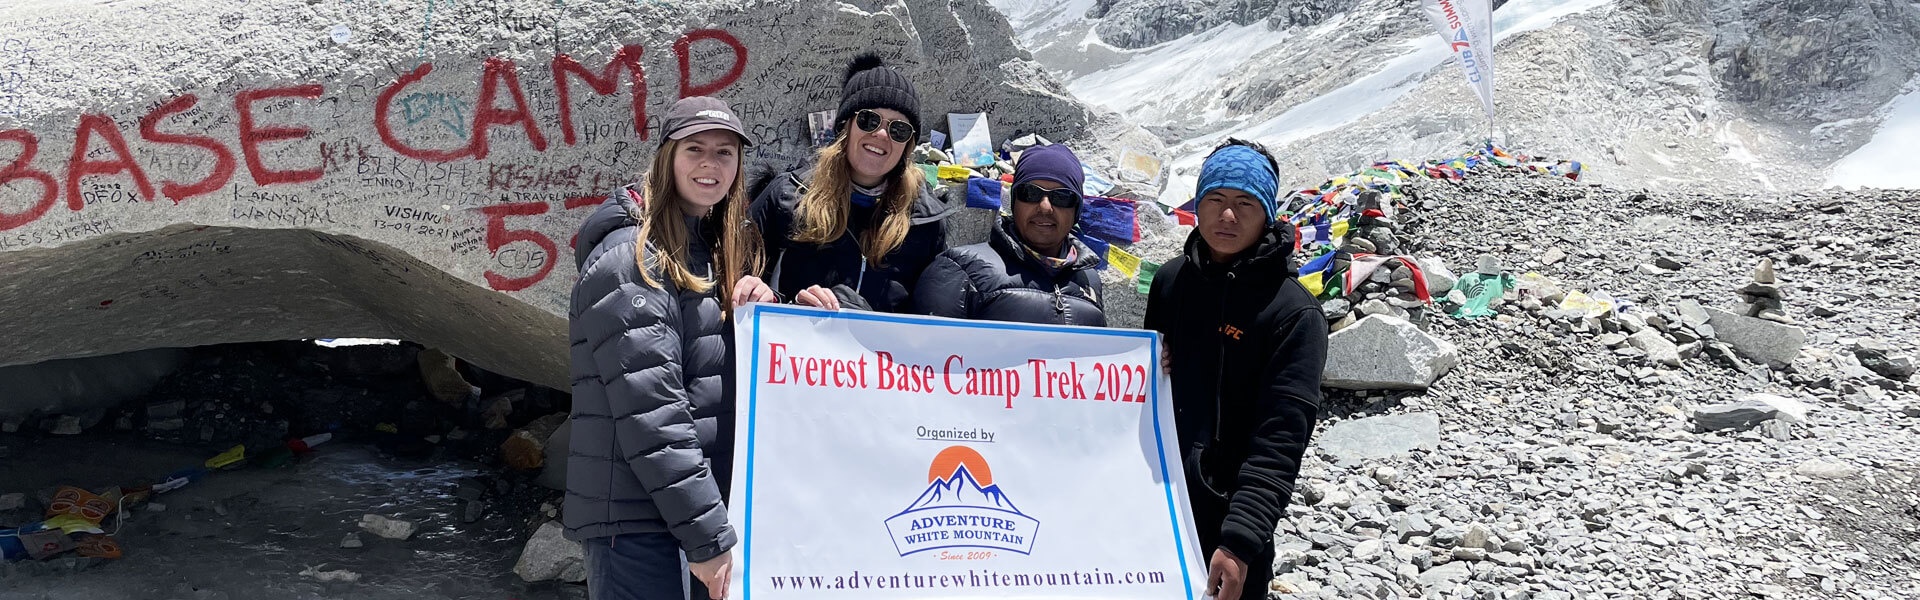 How hard is the Everest Base Camp Trek